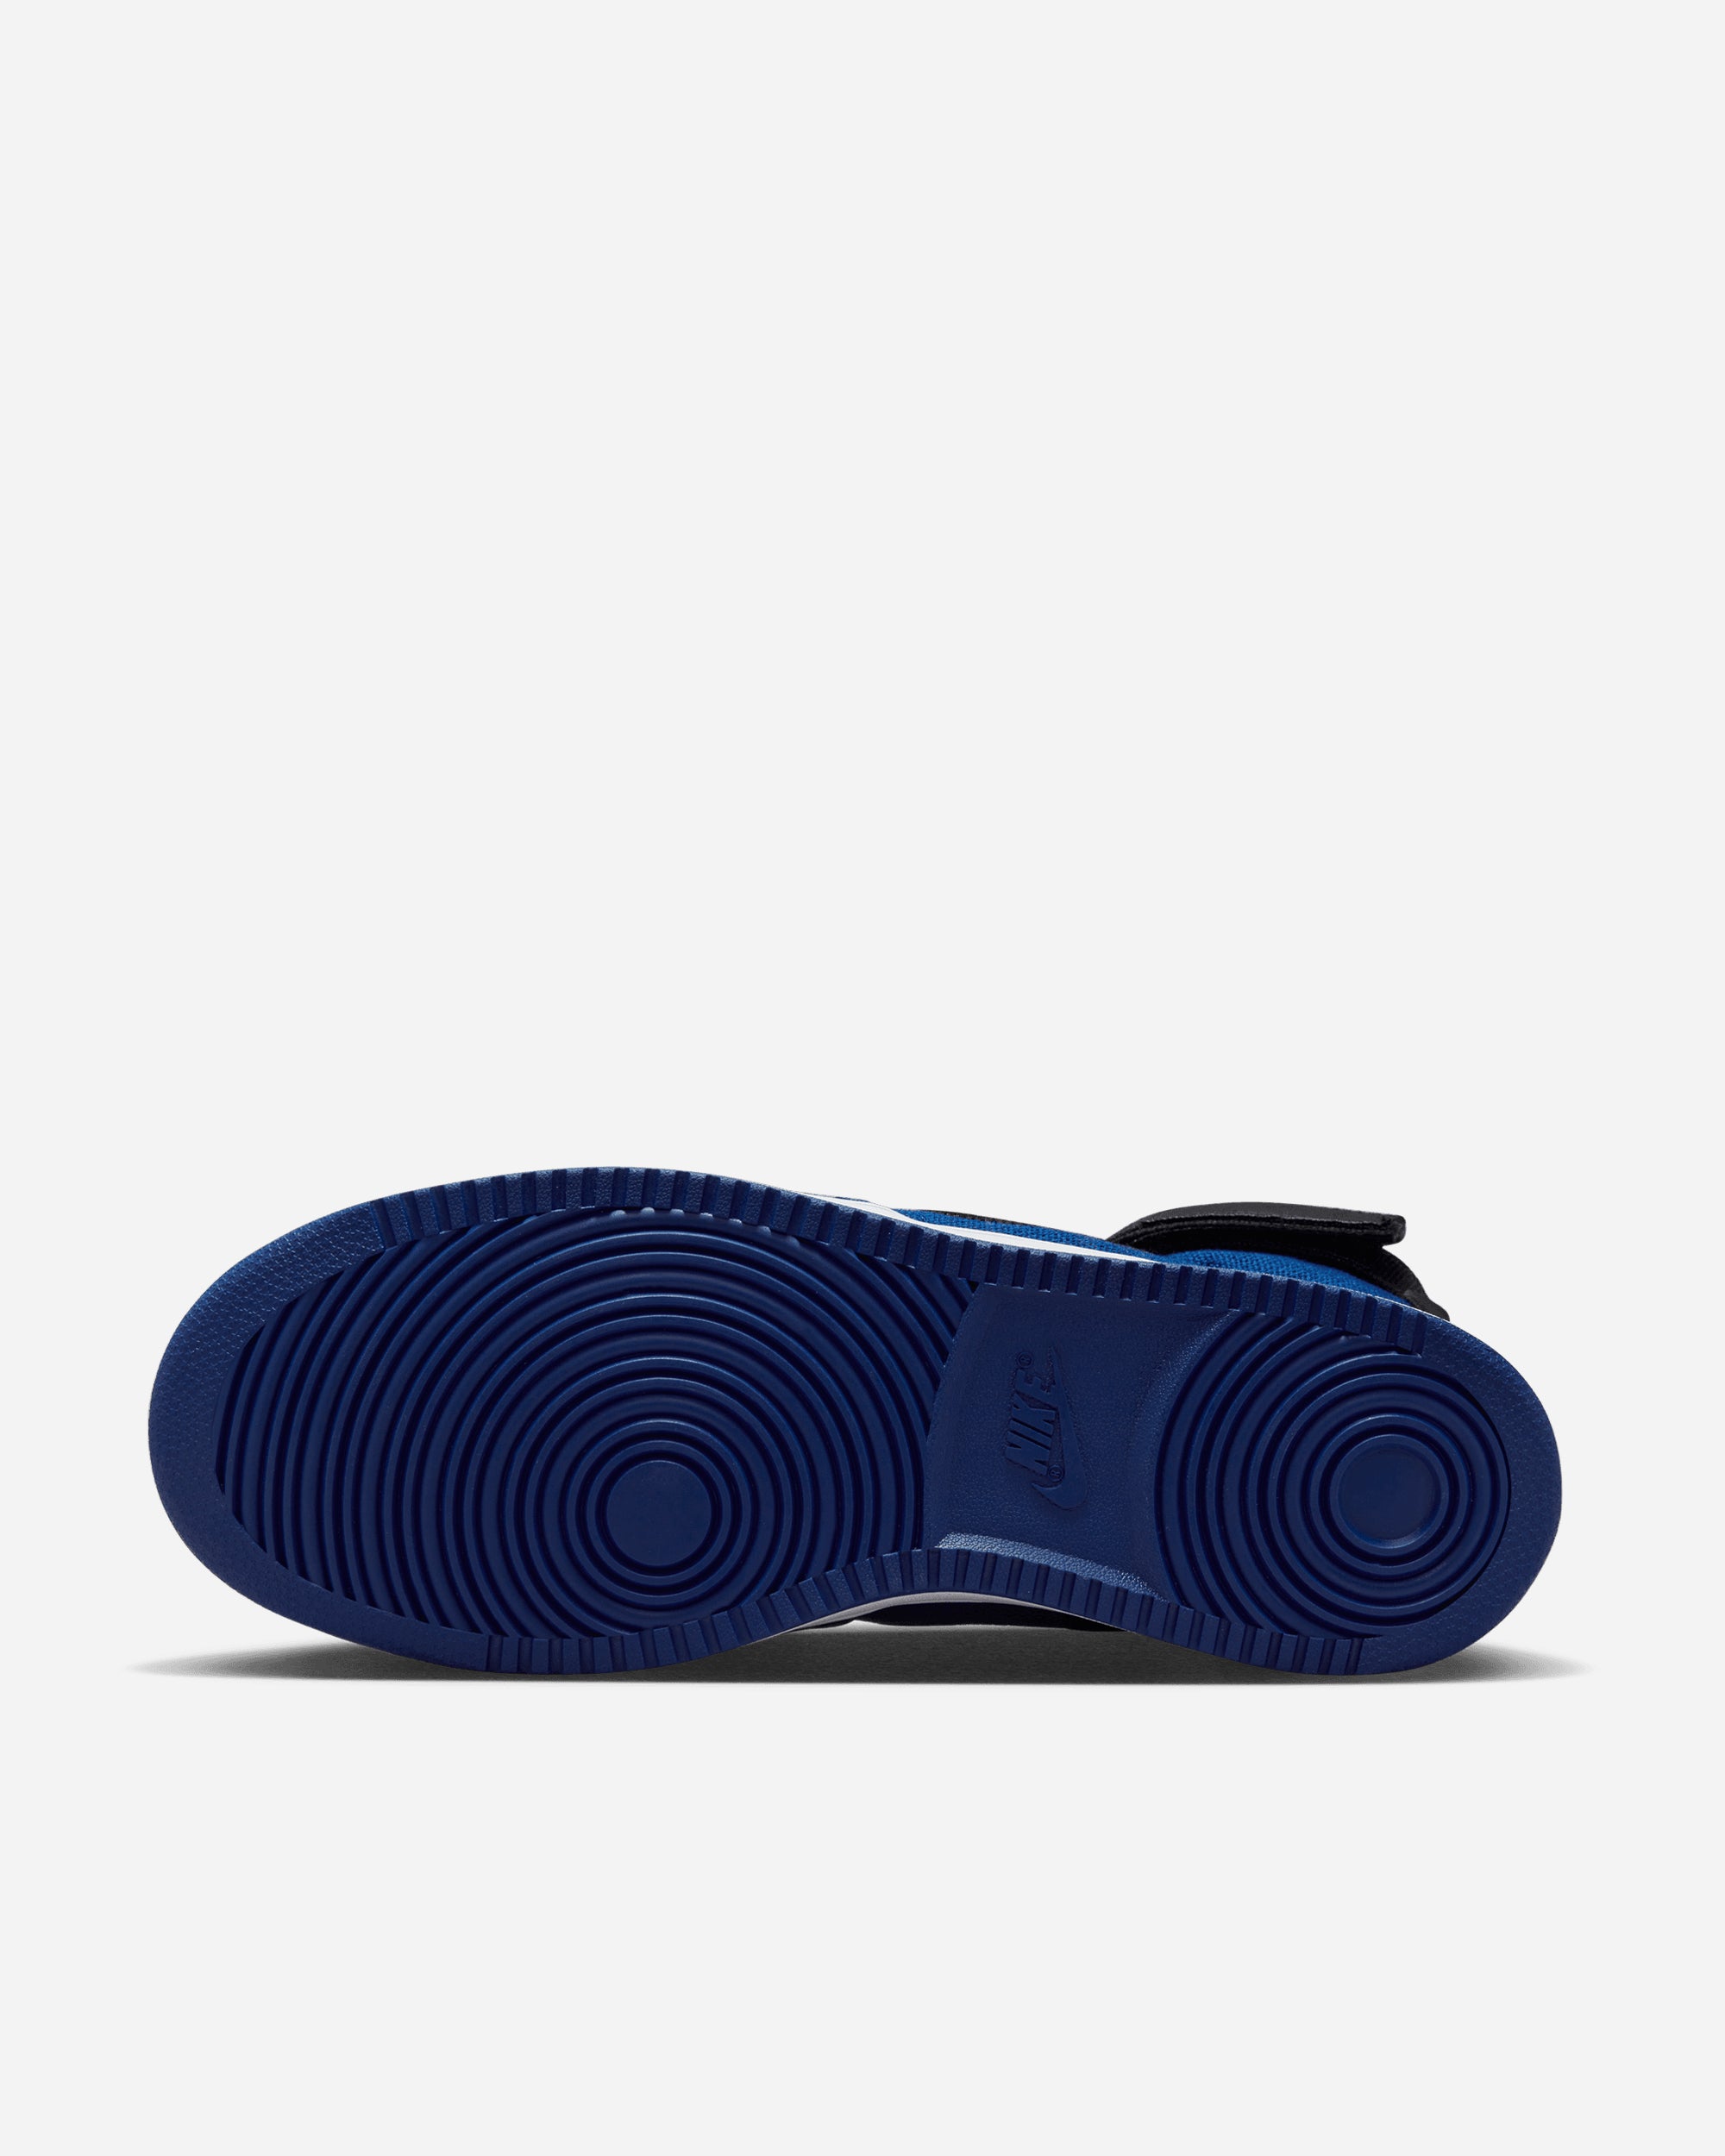 NIKE QS/TZ Nike x Stüssy Vandal DEEP ROYAL BLUE/BLACK-WHITE DX5425-400